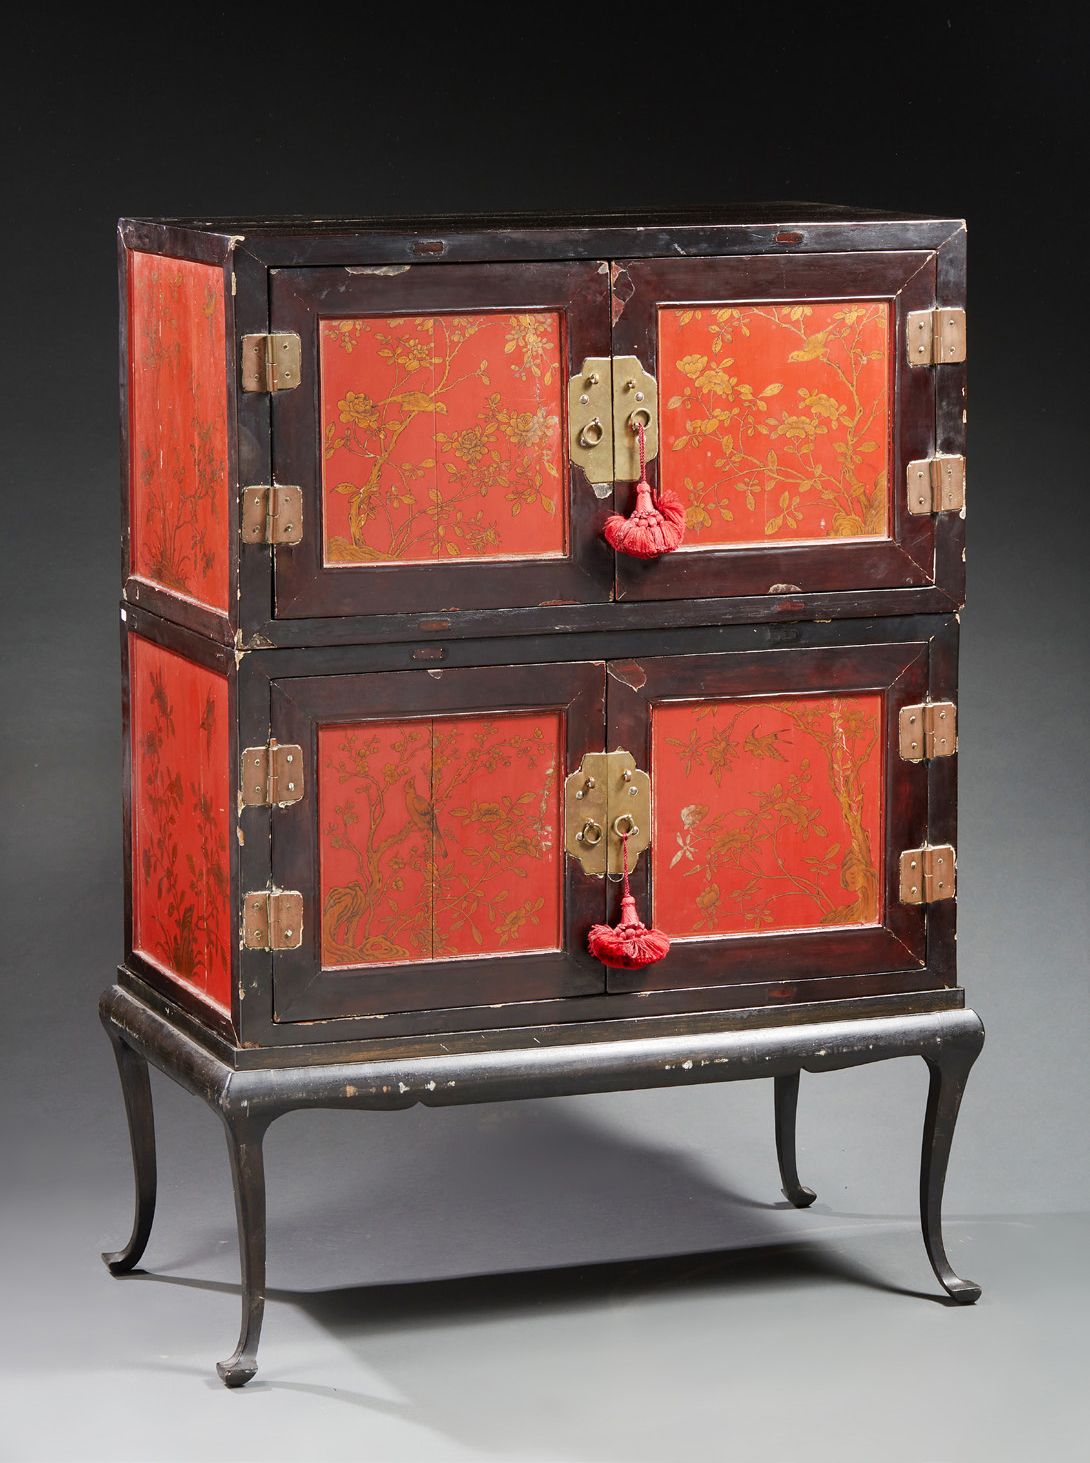 CHINE OU COREE 两个漆面木质的新娘箱。
19世纪末。
尺寸：130 x 89 x 54厘米